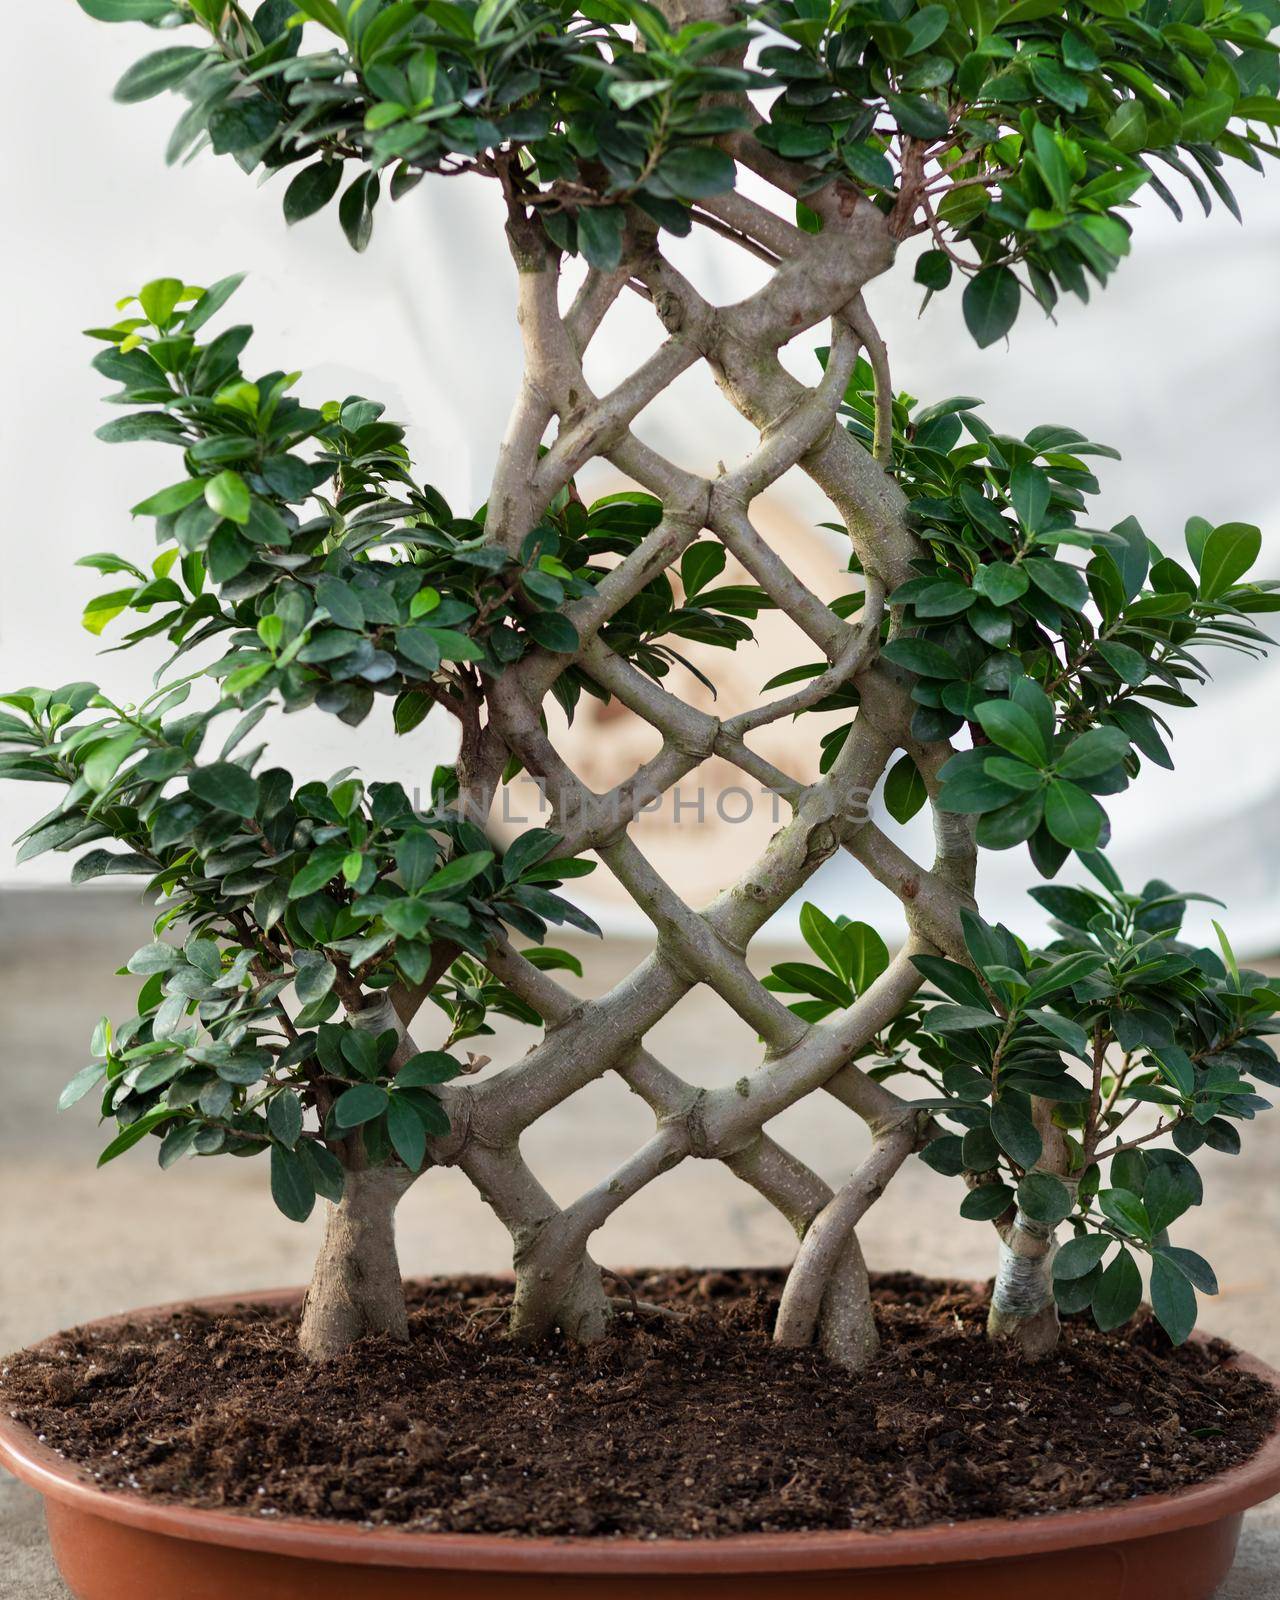 Big size Ficus bonsai ginseng retusa plant closely by ferhad